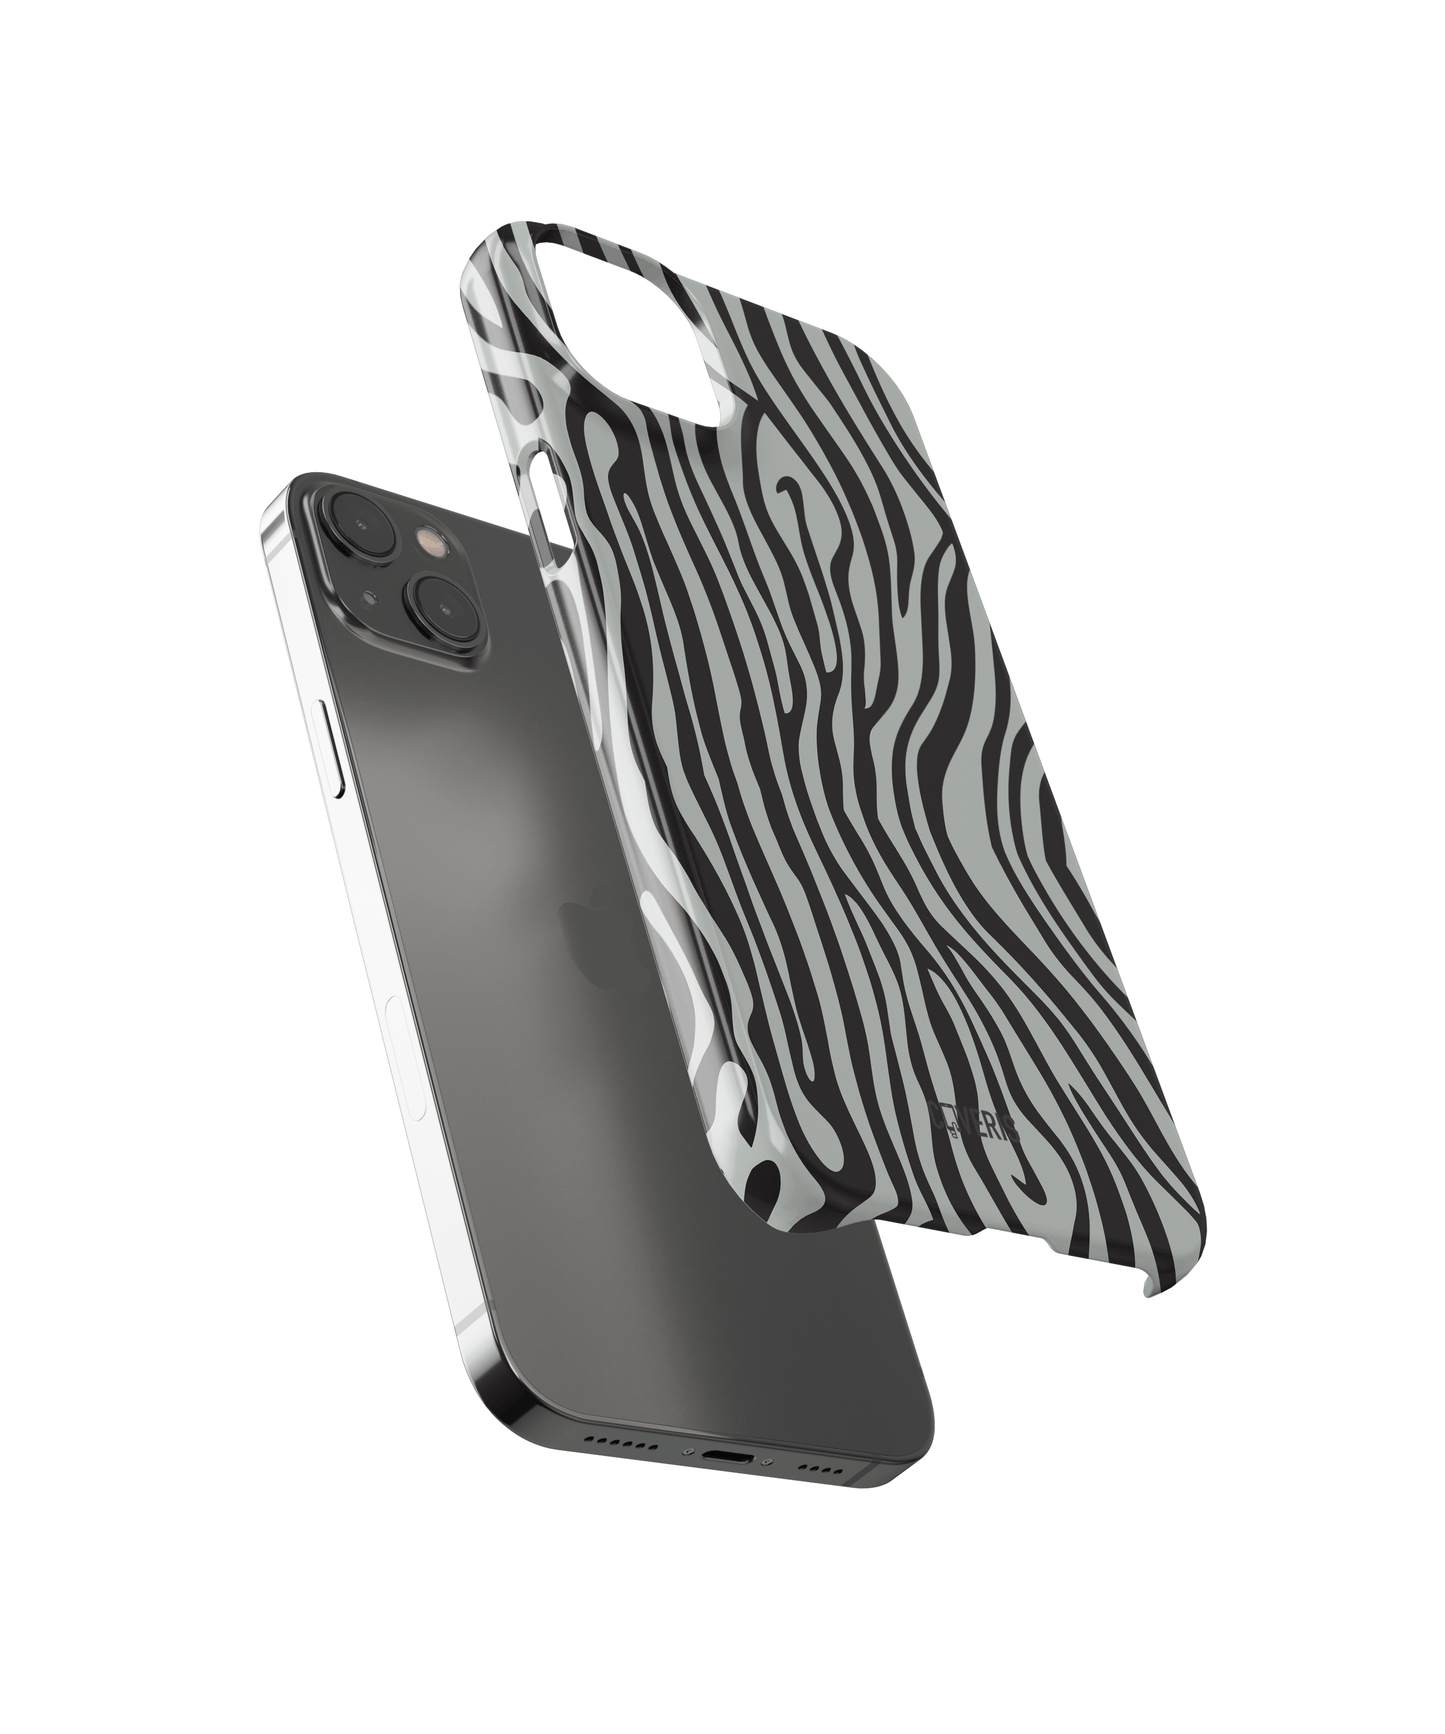 Zebration - Samsung Galaxy Note 10 Plus phone case